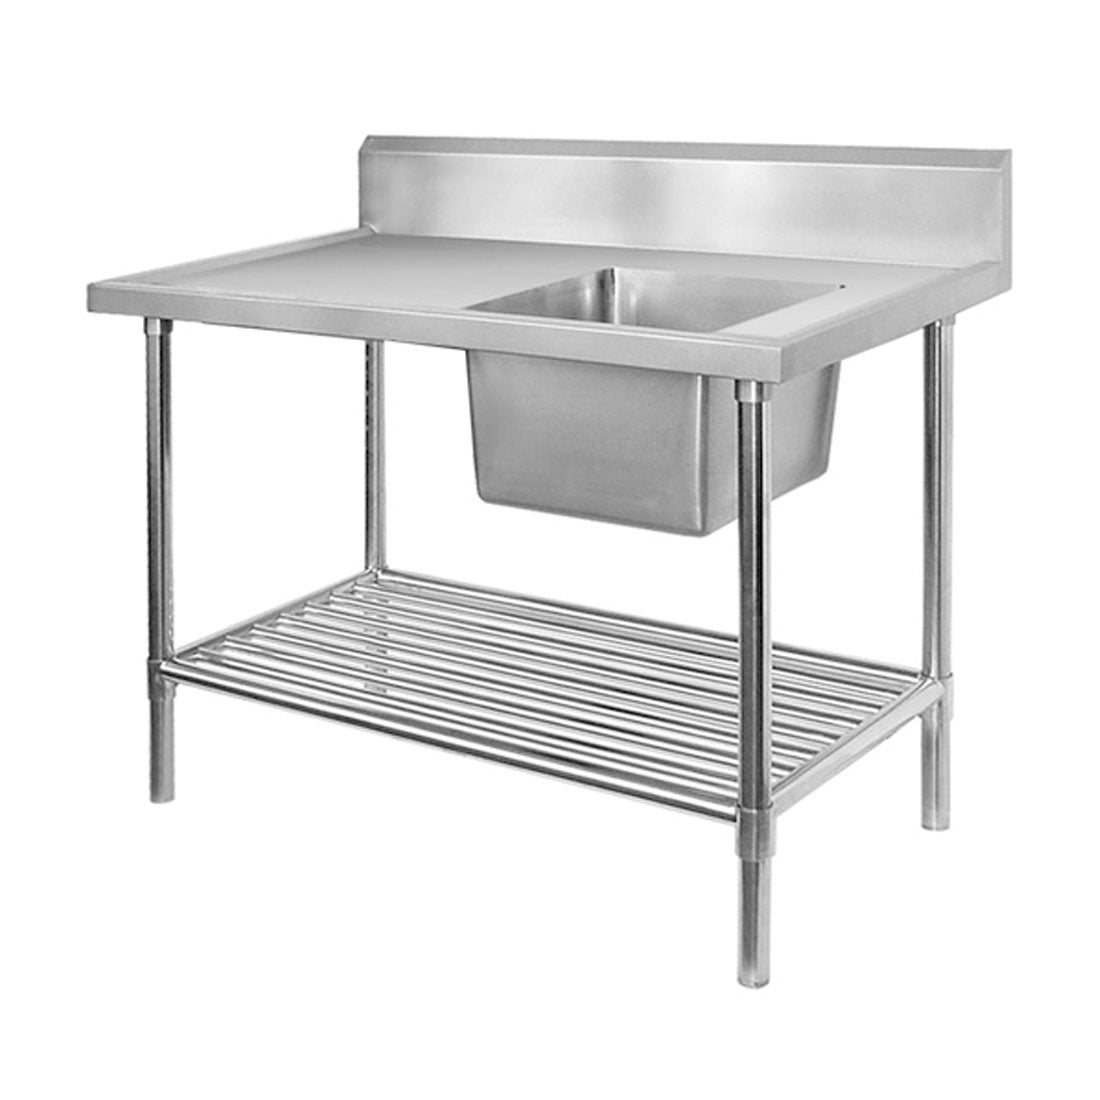 Modular Systems Single Right Sink Bench with Pot Undershelf 2400x600x900 SSB6-2400R/A